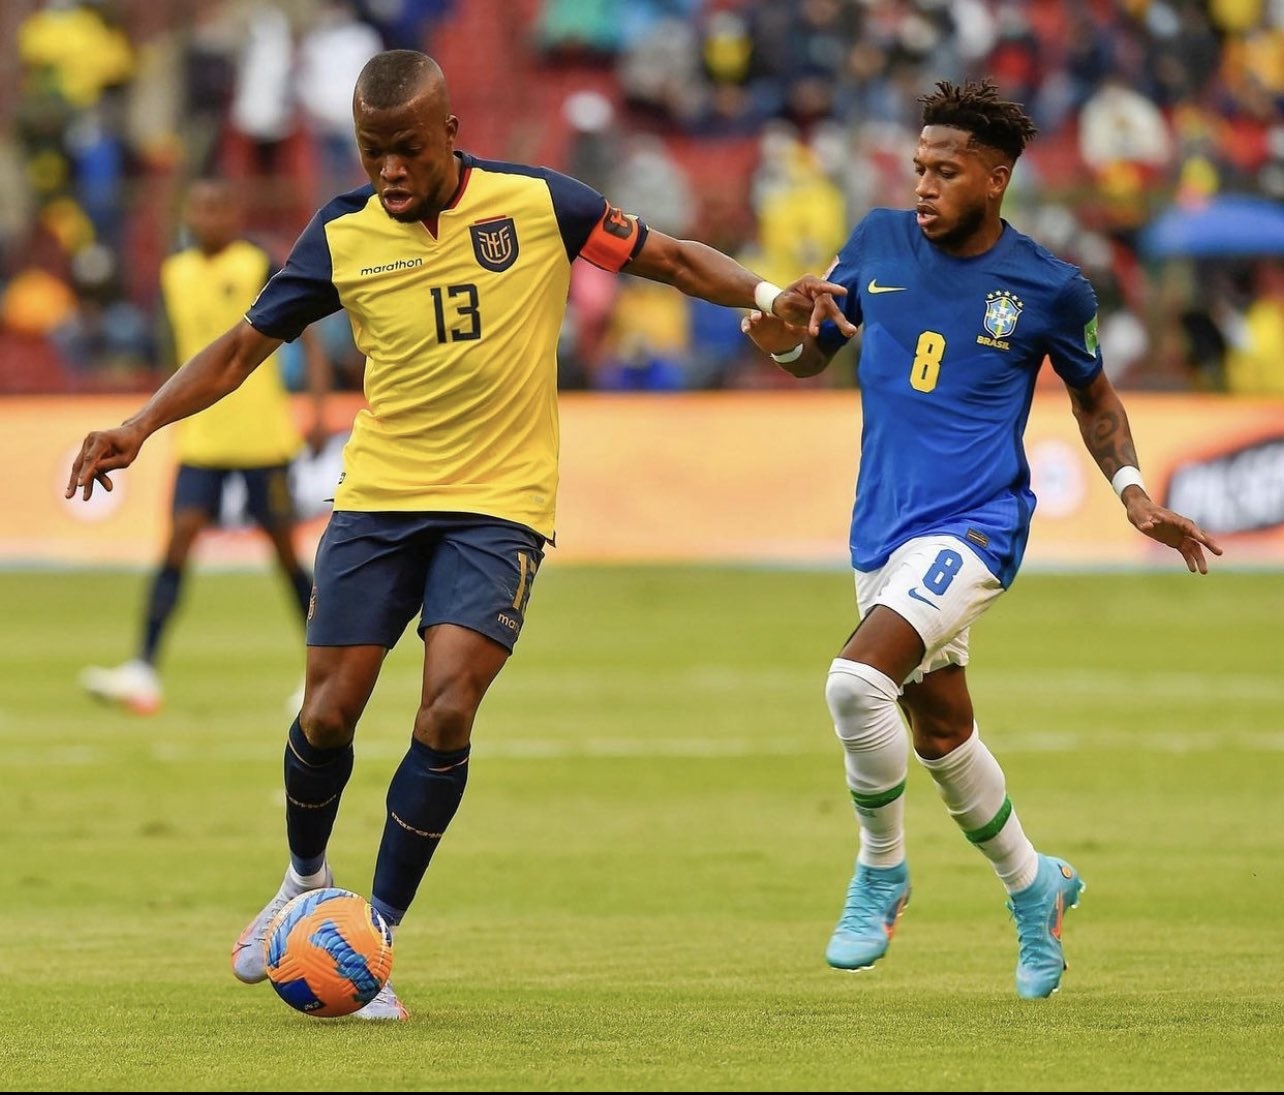 Ecuador Squad Unveiled Ahead of World Cup 2022 in Qatar